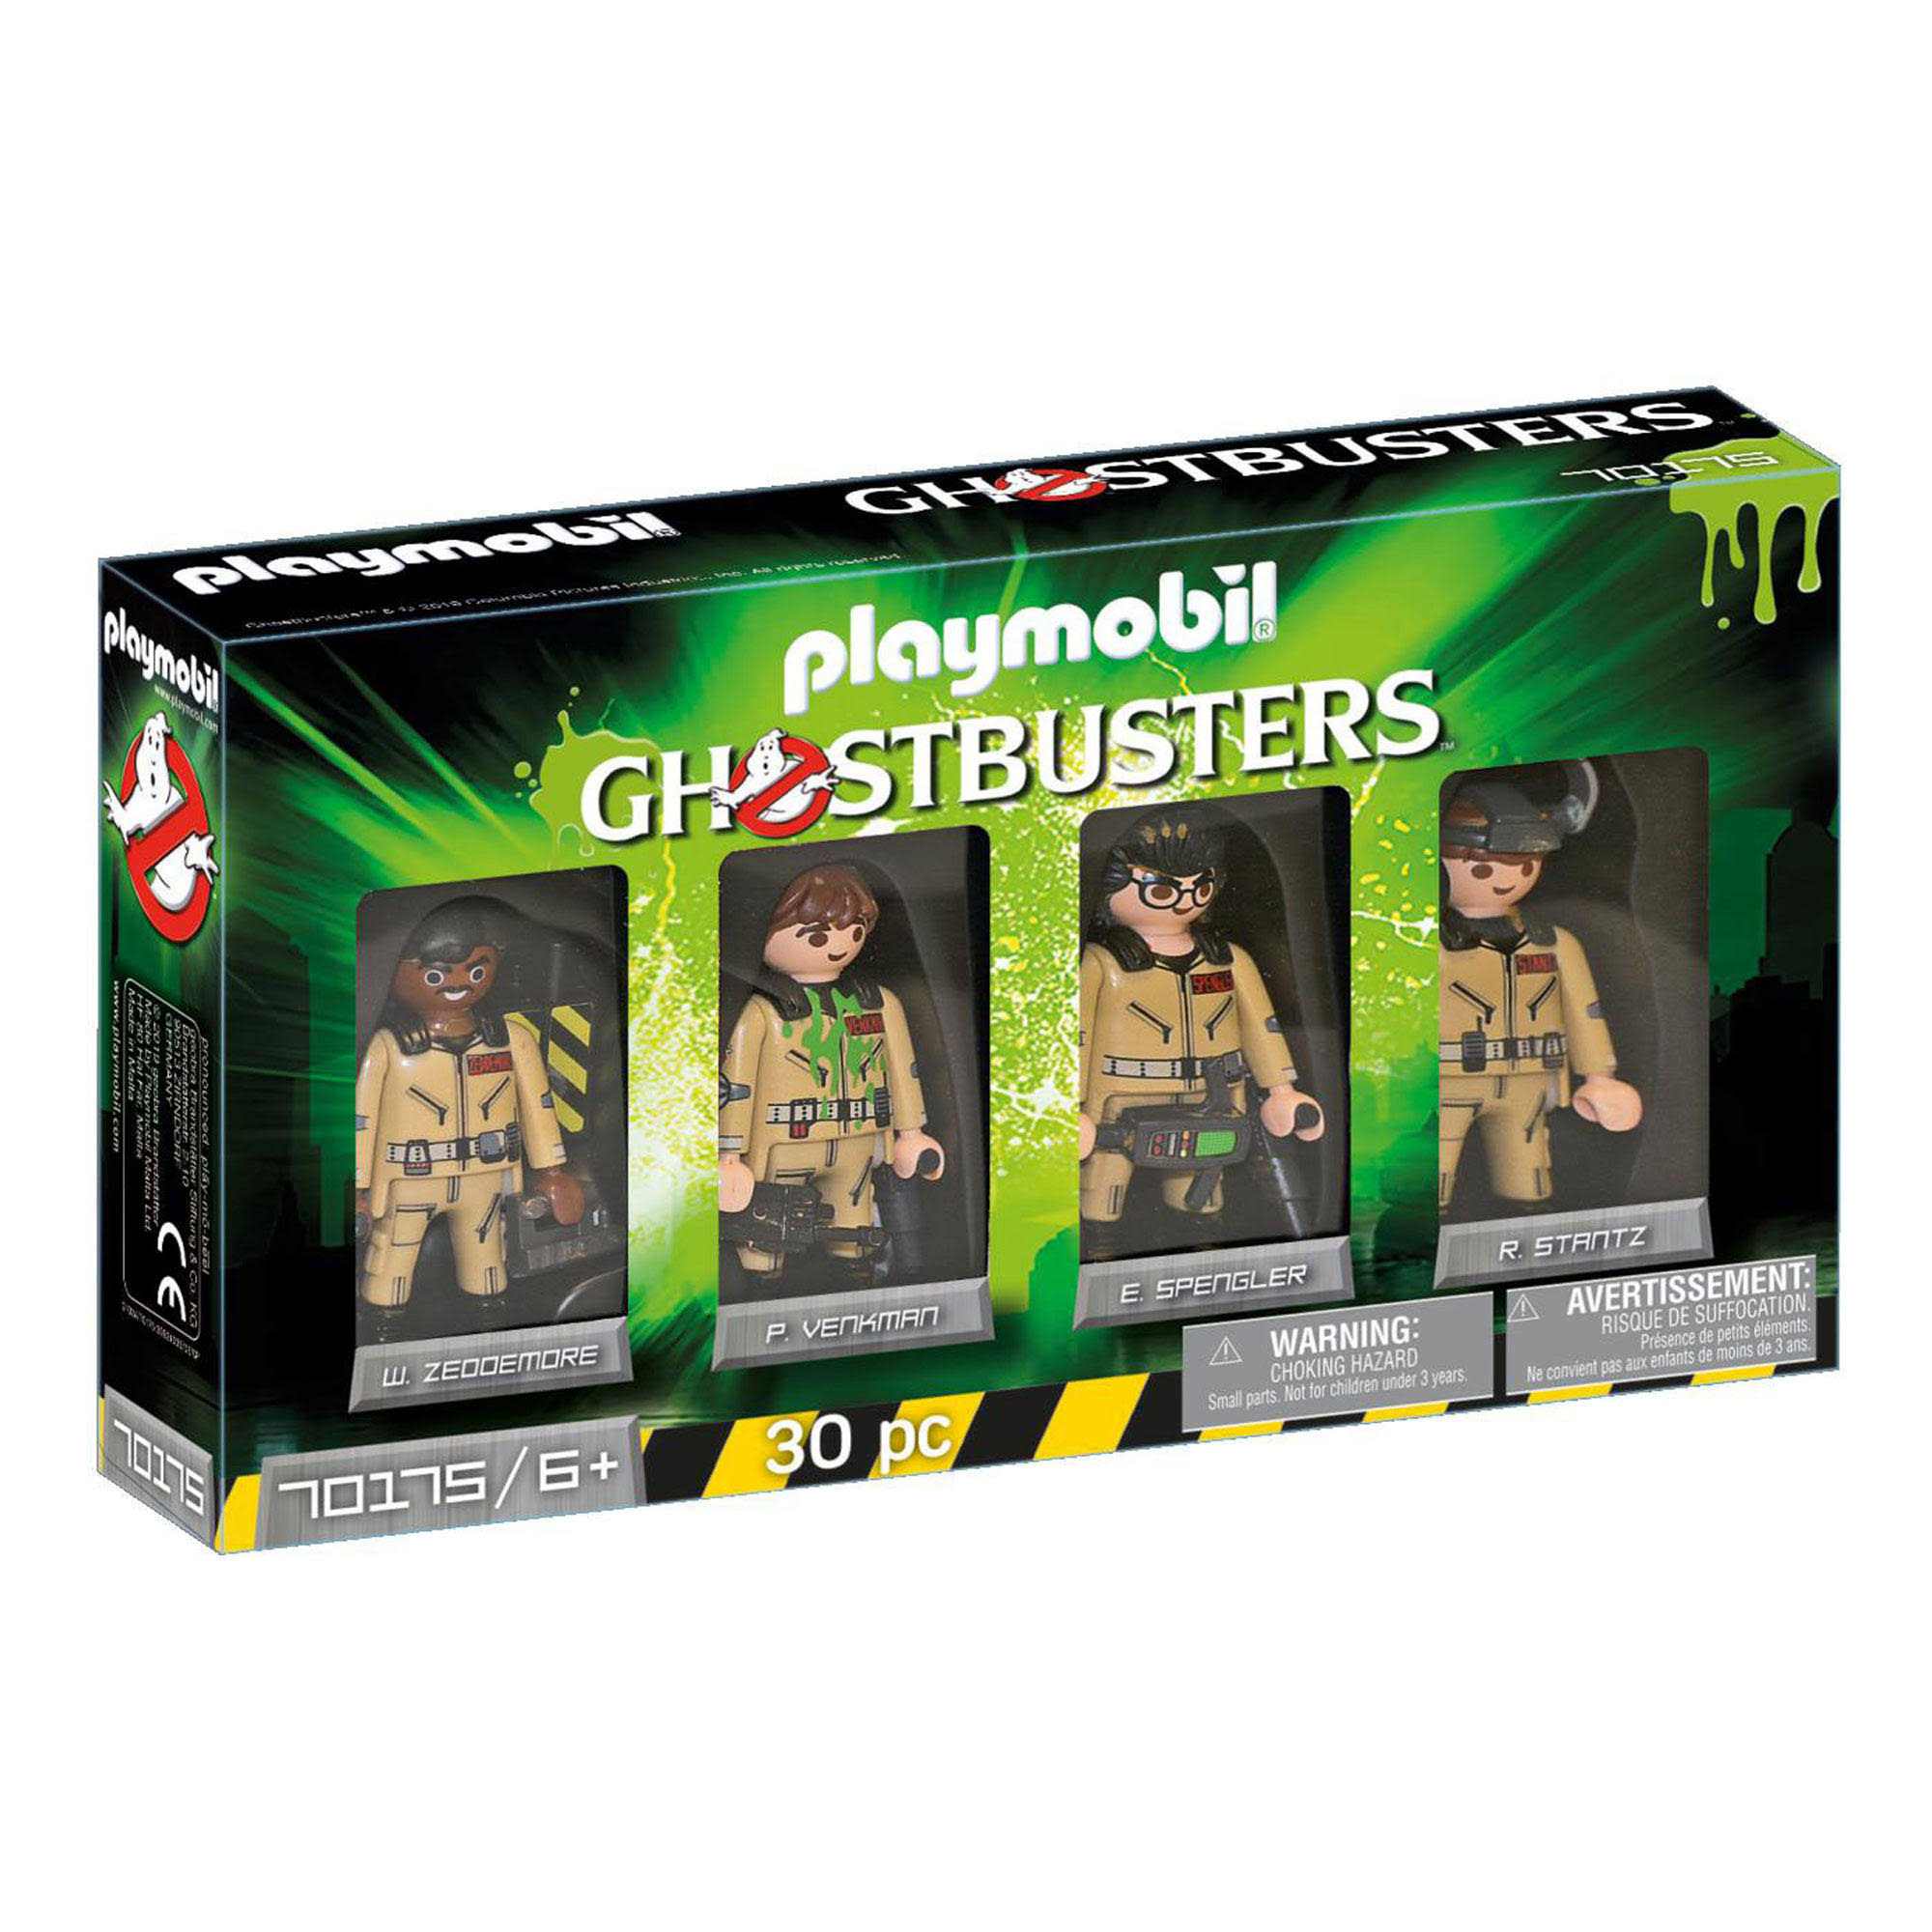 Playmobil Ghostbusters Figures Playkit - 4pk